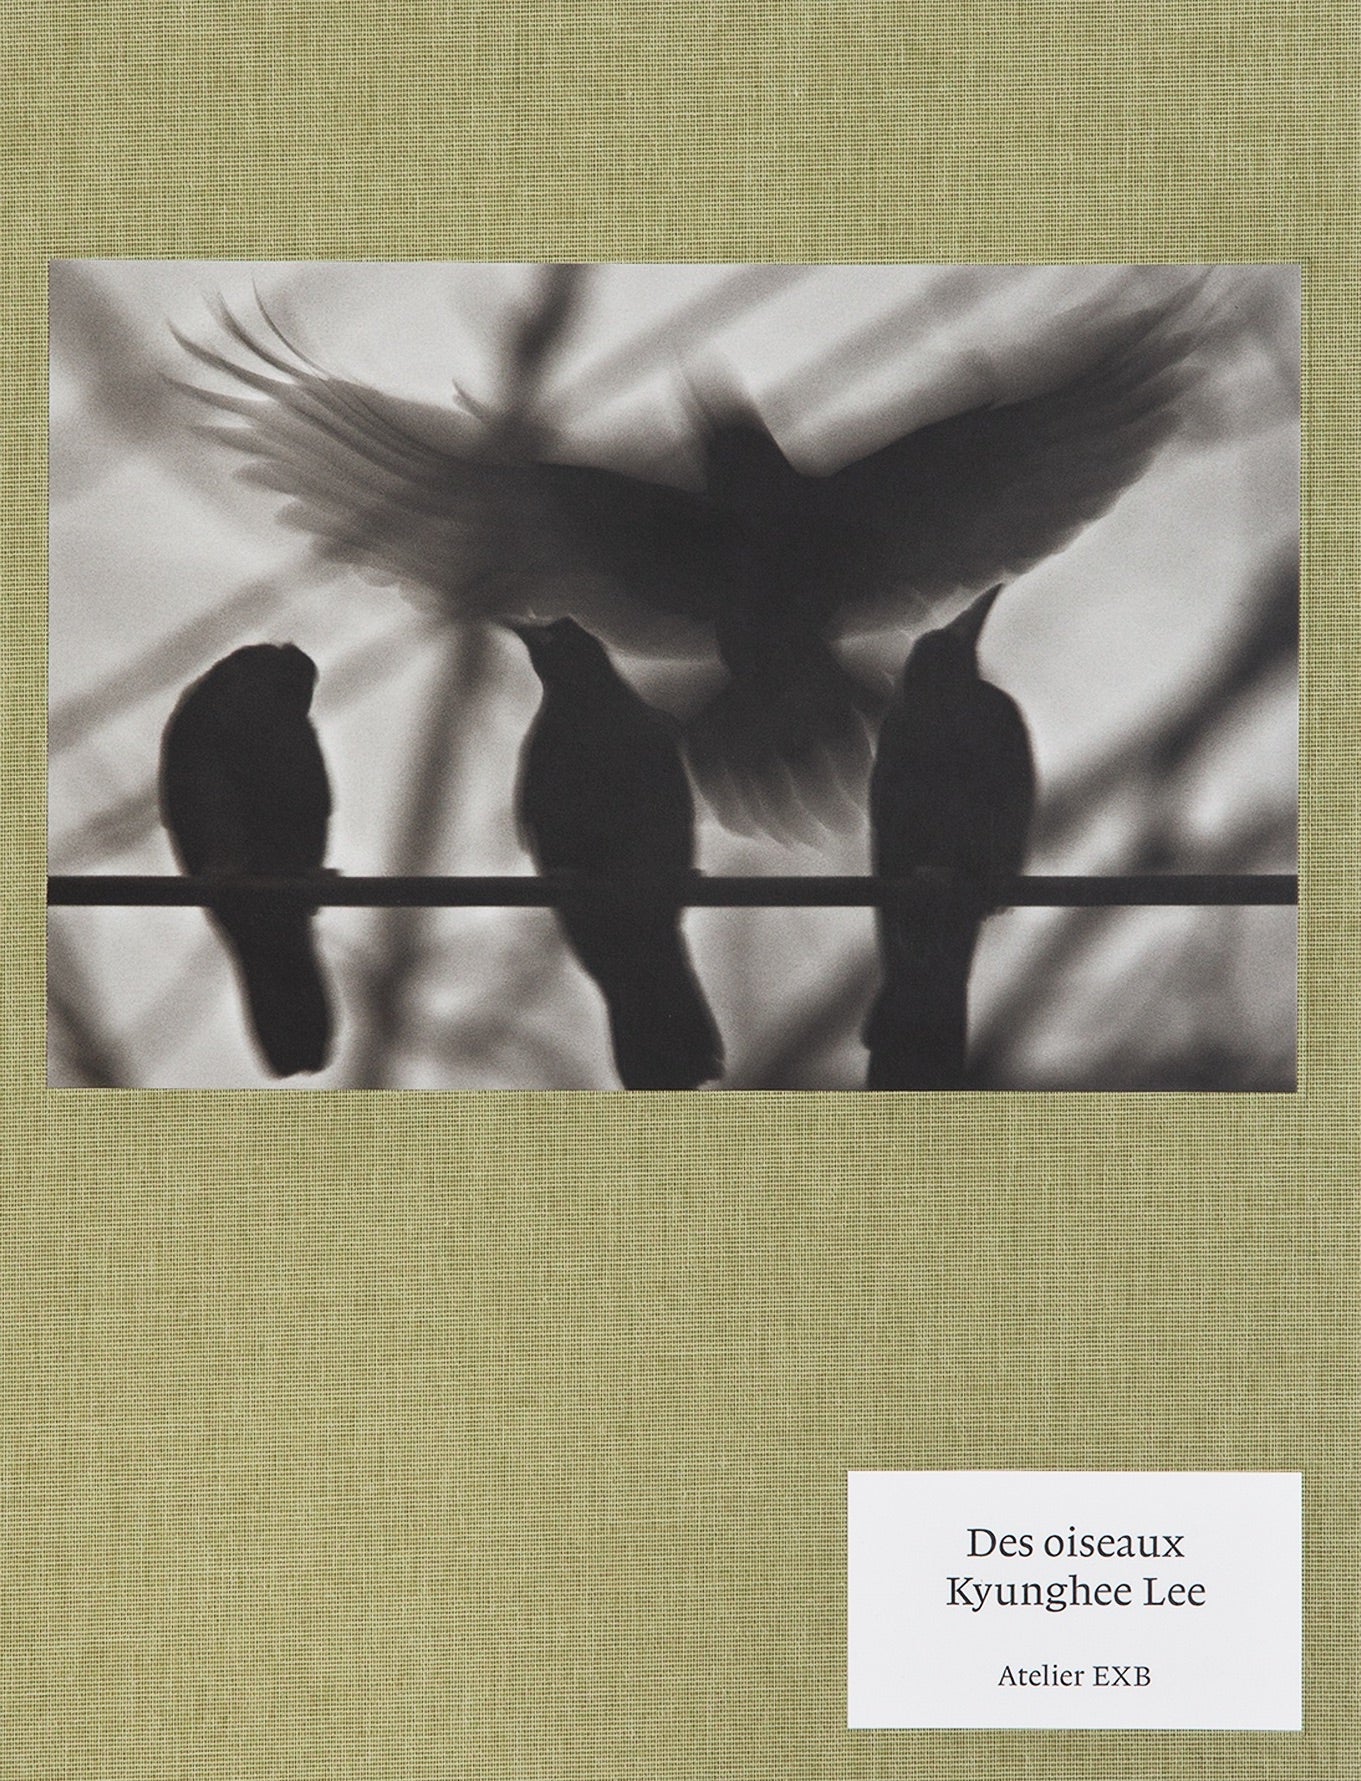 Kyunghee-Lee: On Birds (Des oiseaux) cover